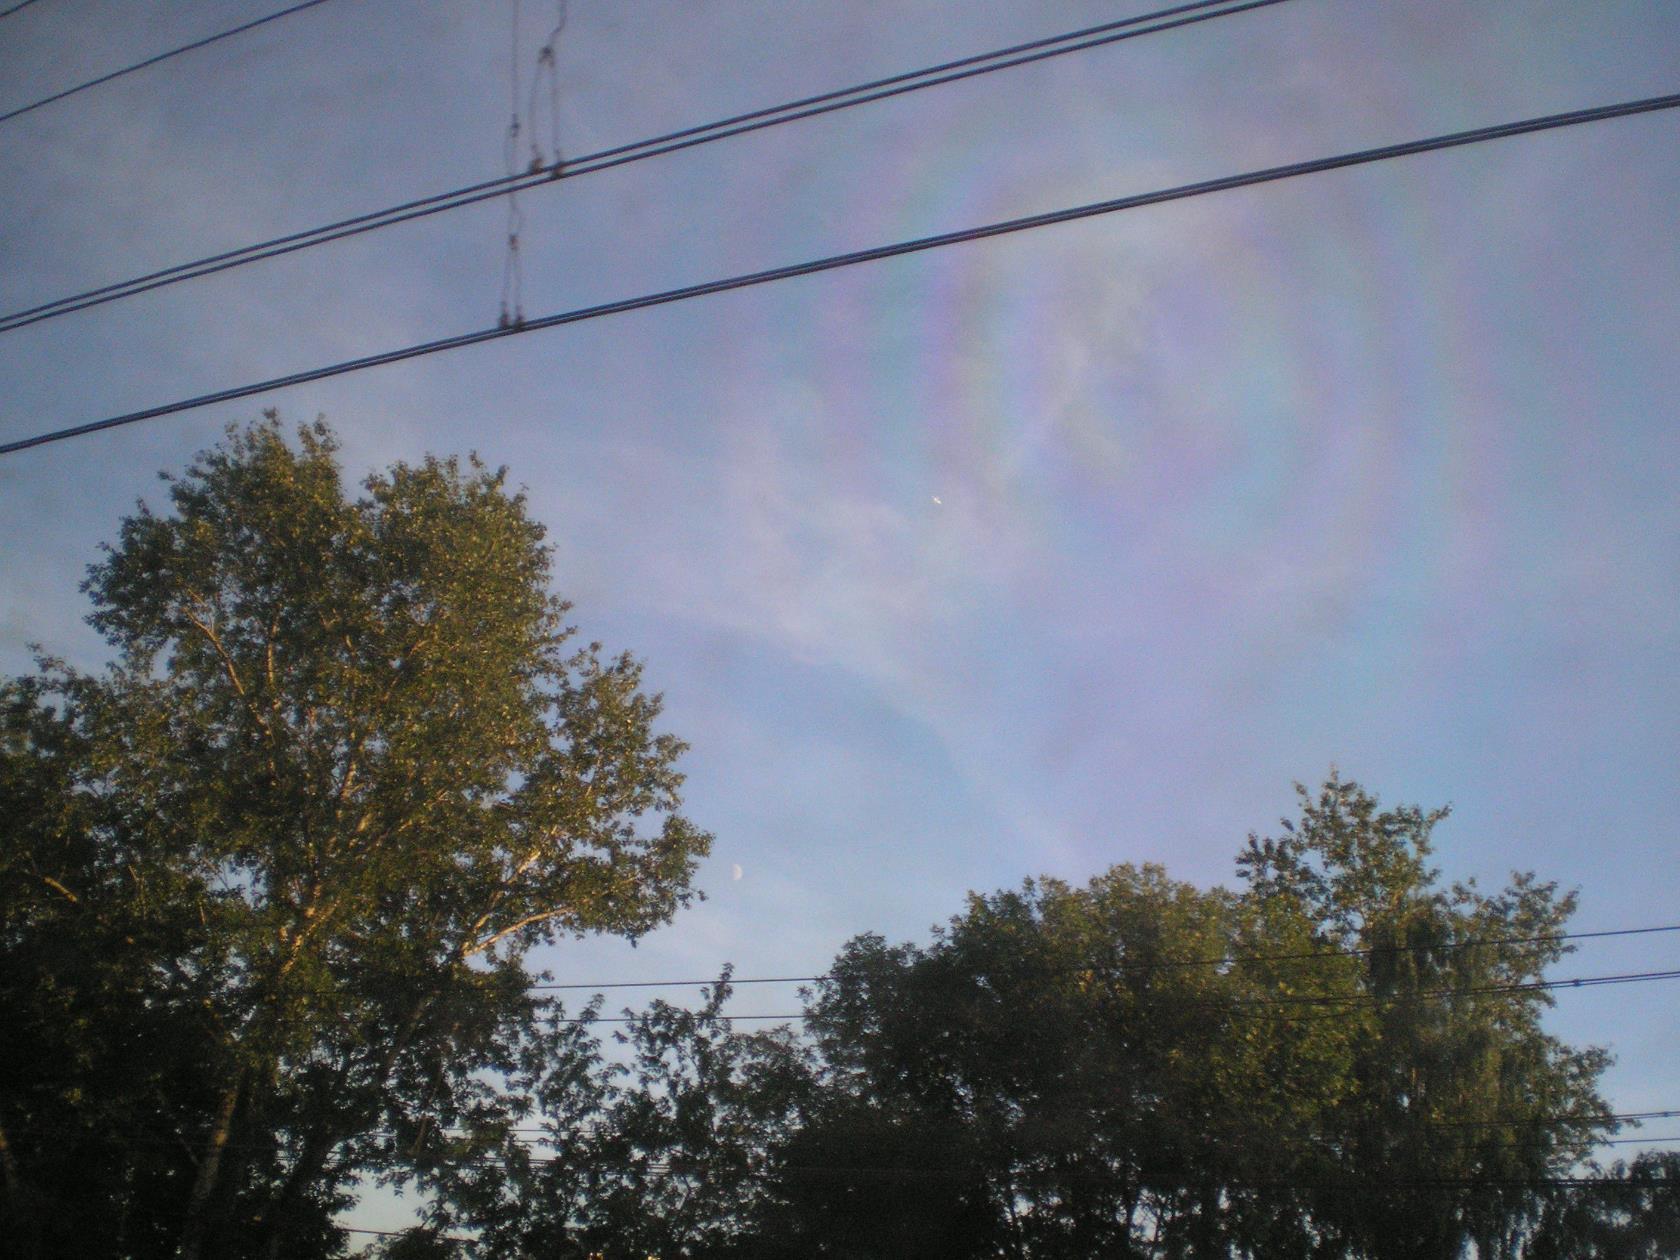  Спиральная радуга в небе (фото и видео) - фото 6